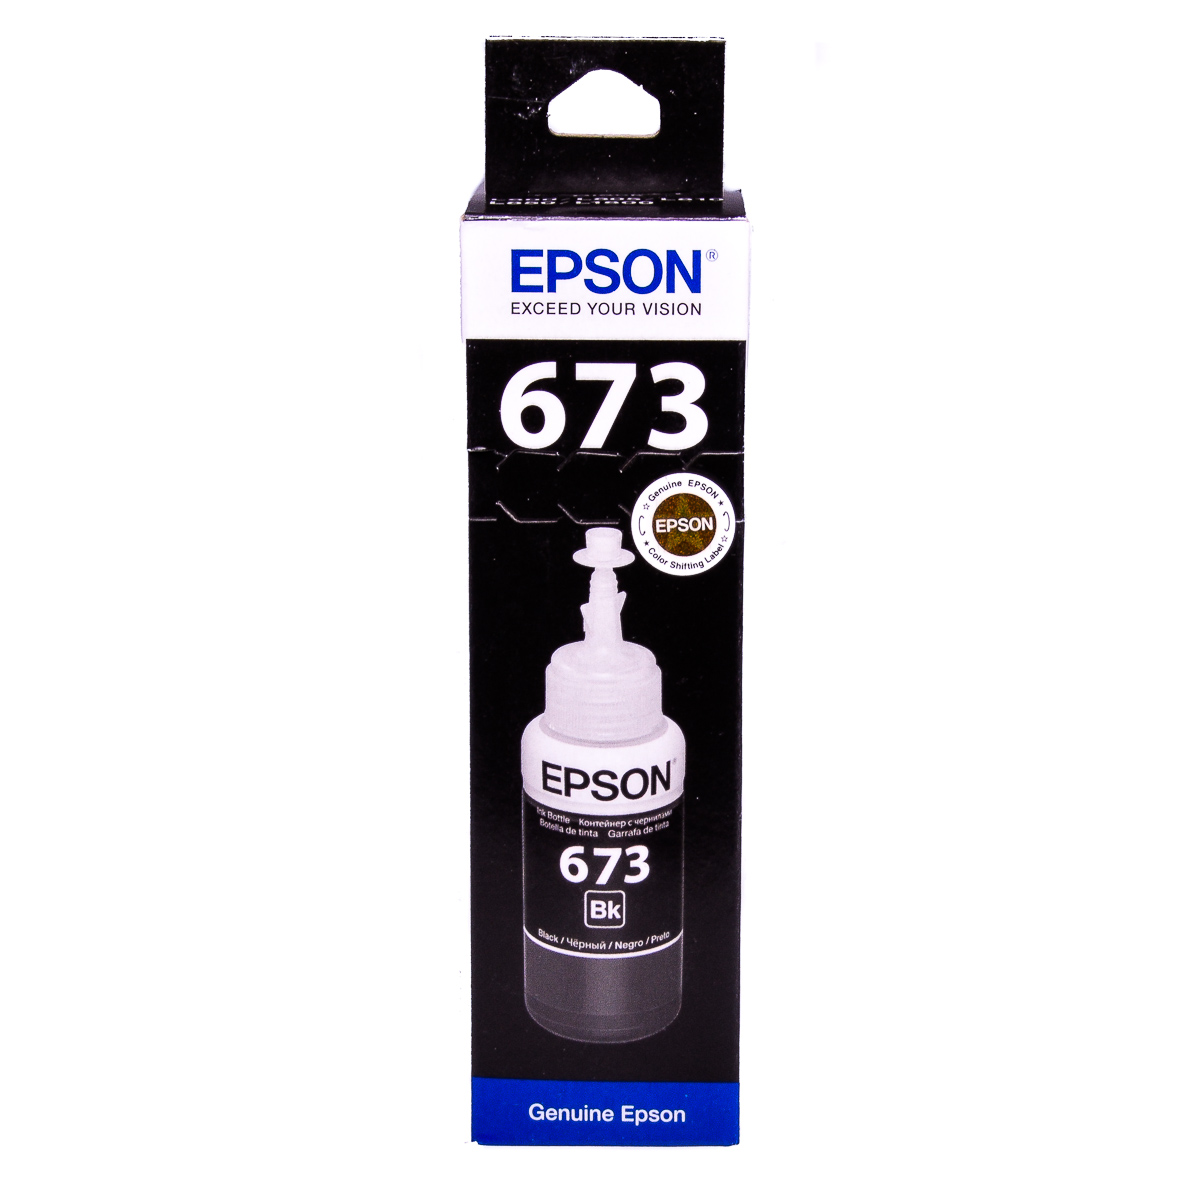 Epson T0801 Black original dye ink refill Replaces Stylus P50